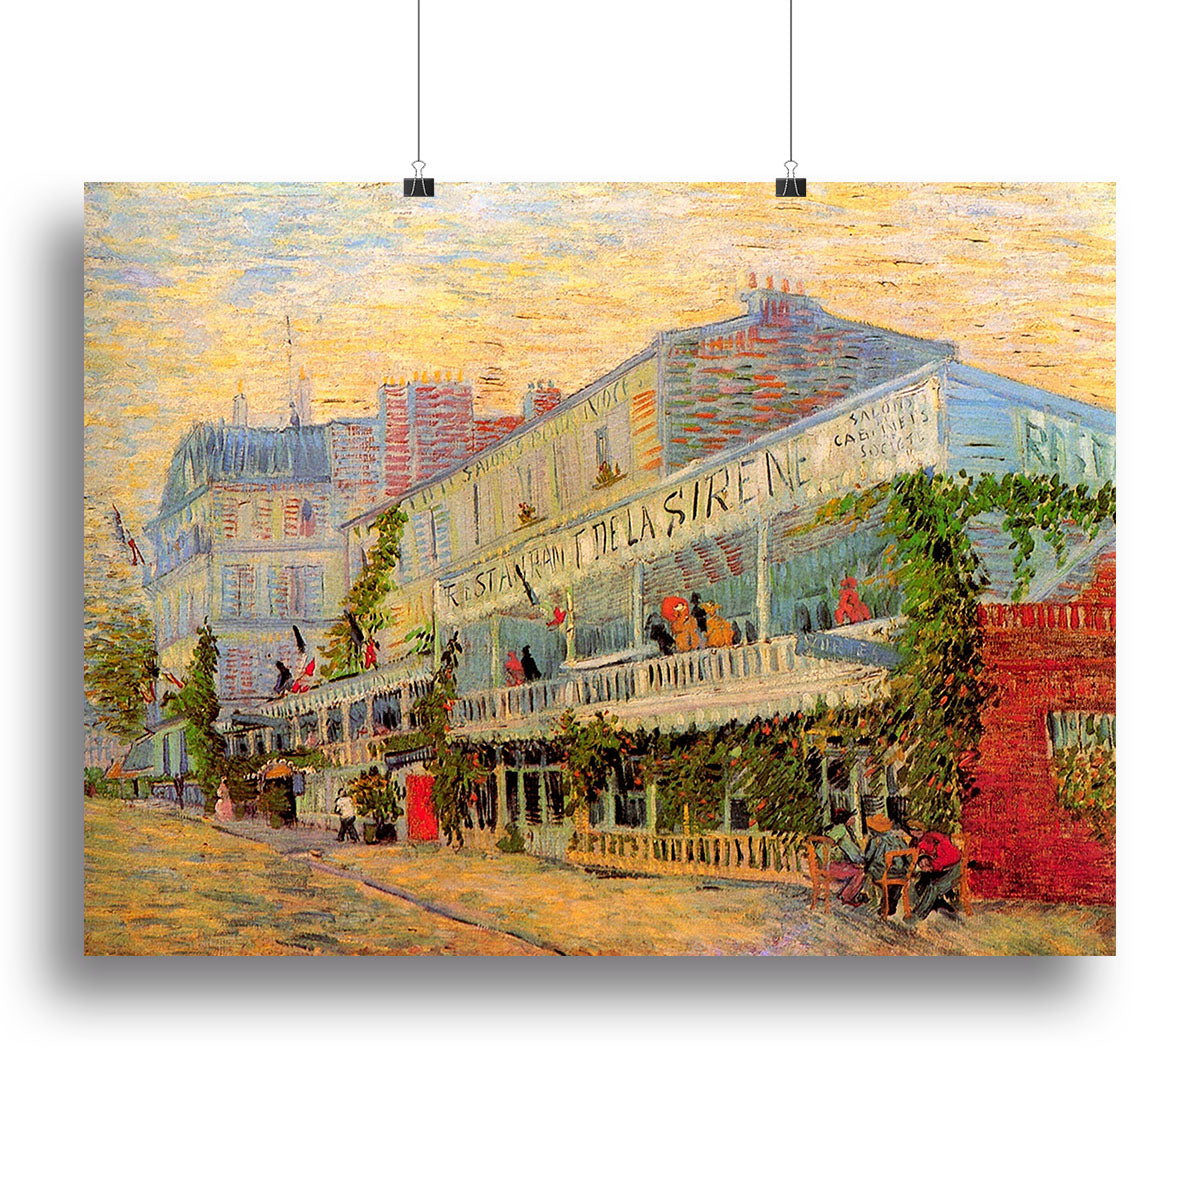 Restaurant de la Sirene at Asnieres by Van Gogh Canvas Print or Poster - Canvas Art Rocks - 2